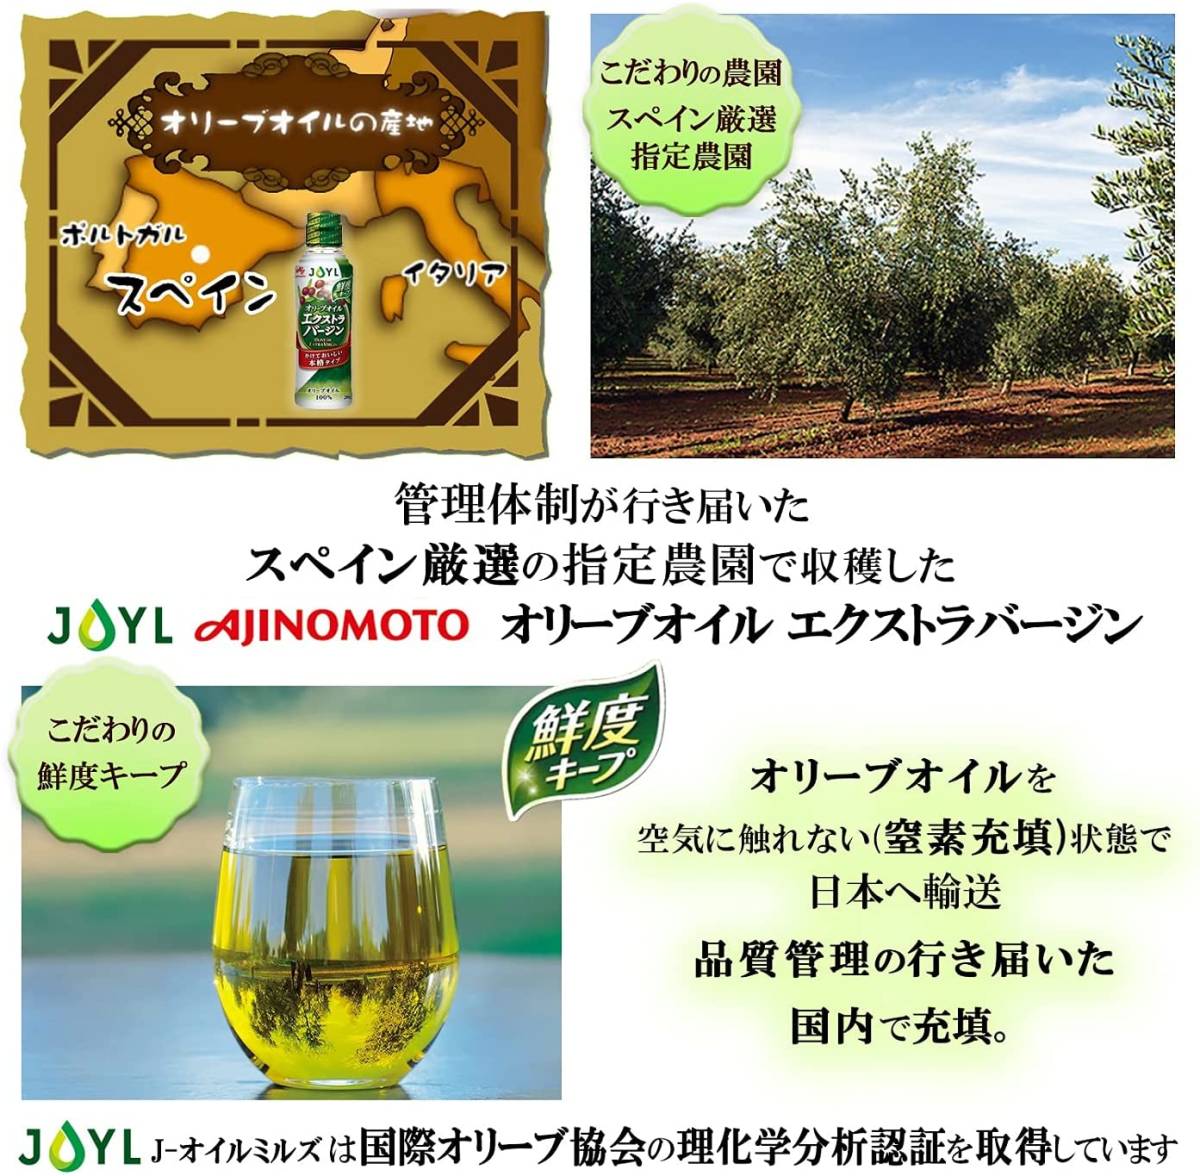 JOYL オリーブオイル エクストラバージン (オリーブオイル 100%) 味の素 J-オイルミルズ 瓶 400g_画像6